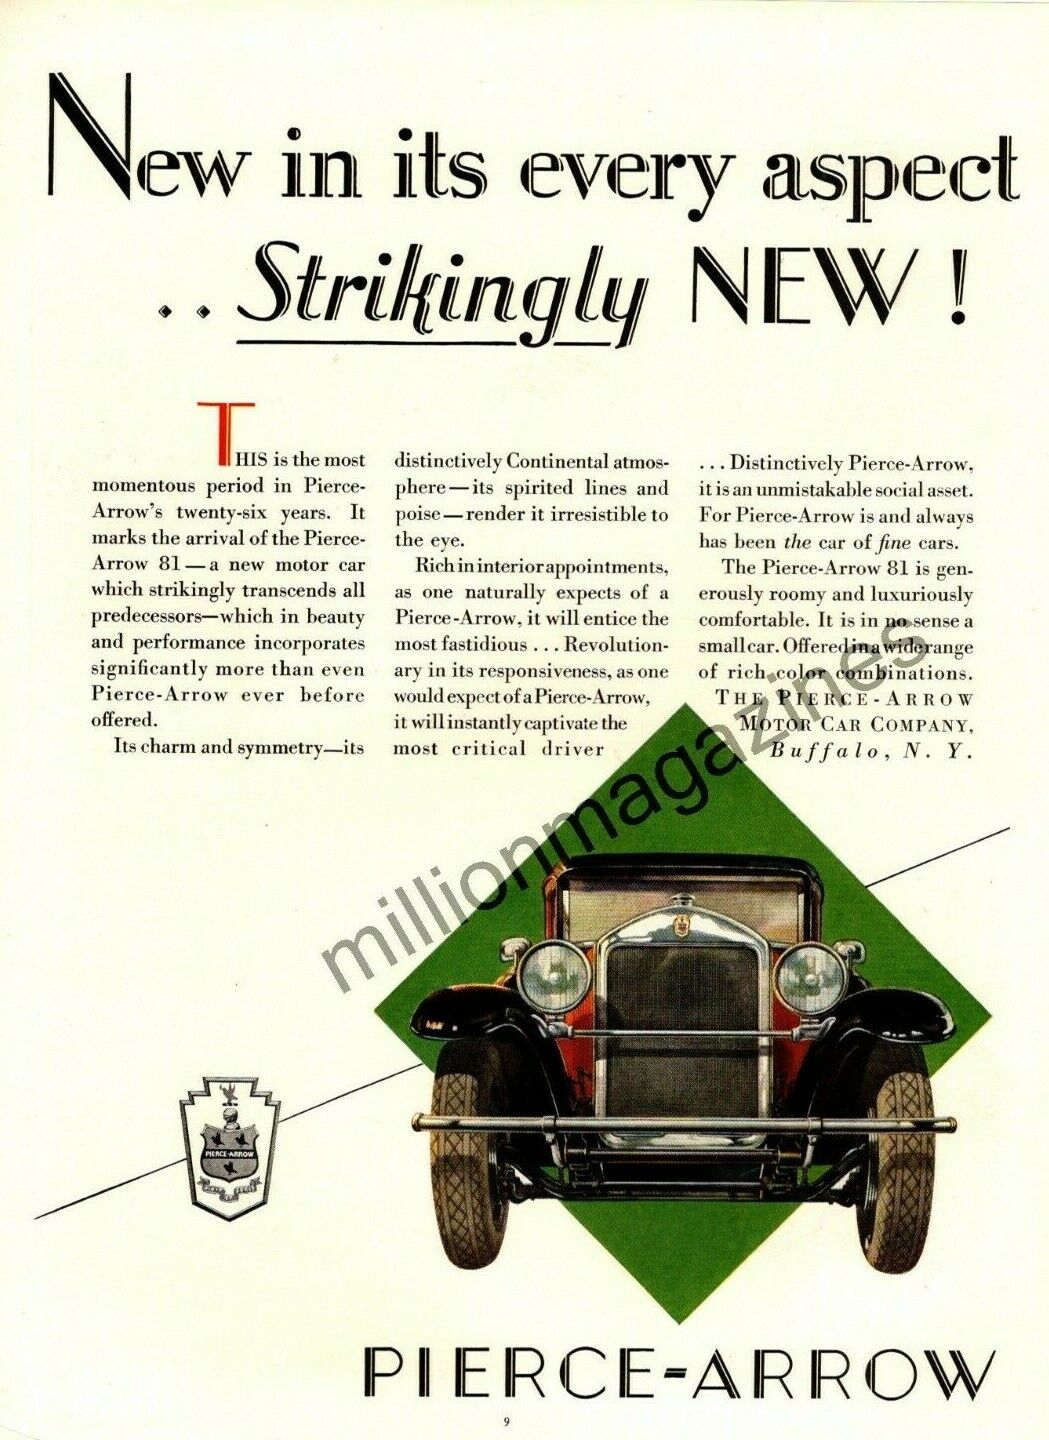 1928 Pierce Arrow Series 81 with drum headlights Original ad from Theatre. Rare